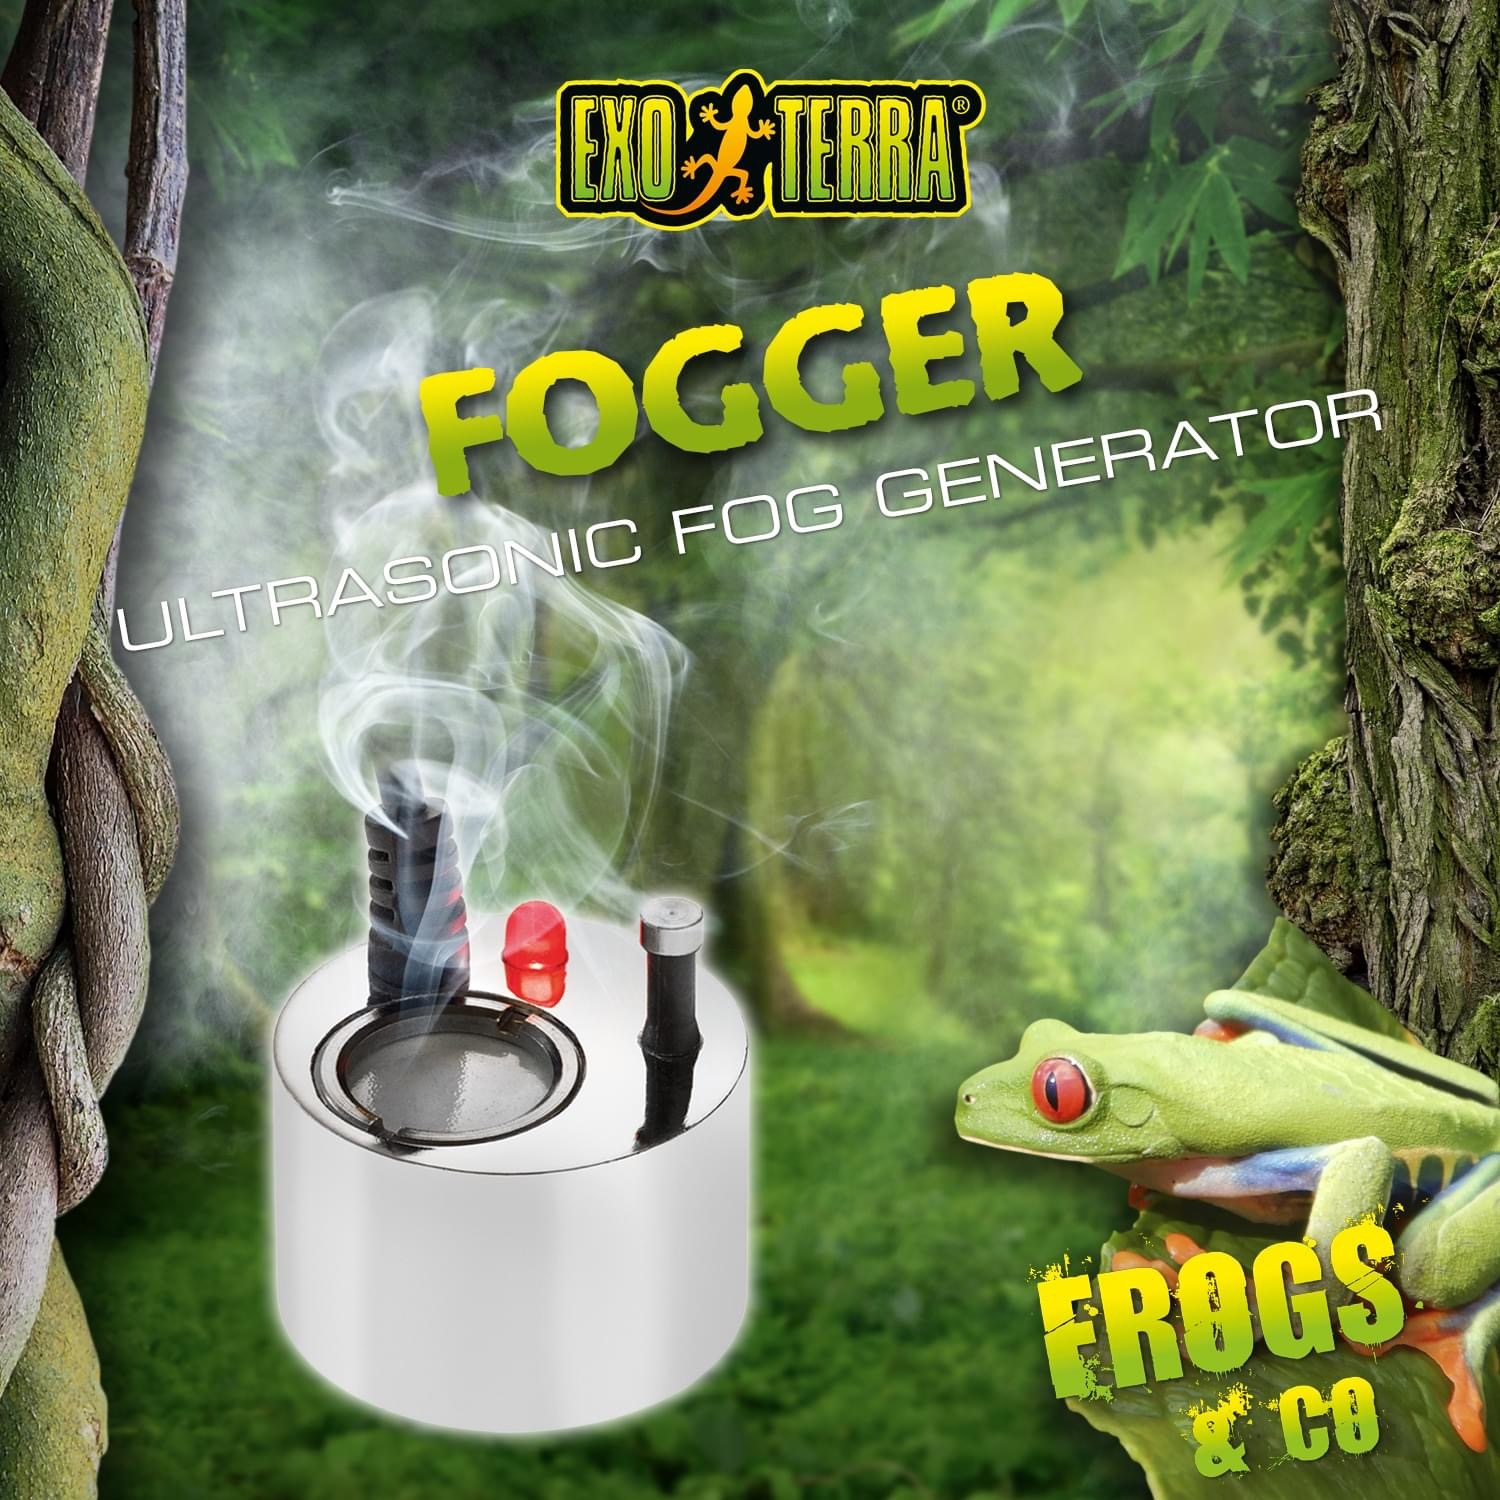 ECO-LOGIS FOGGER 100ml Insecticide spray Générateur de brouillard